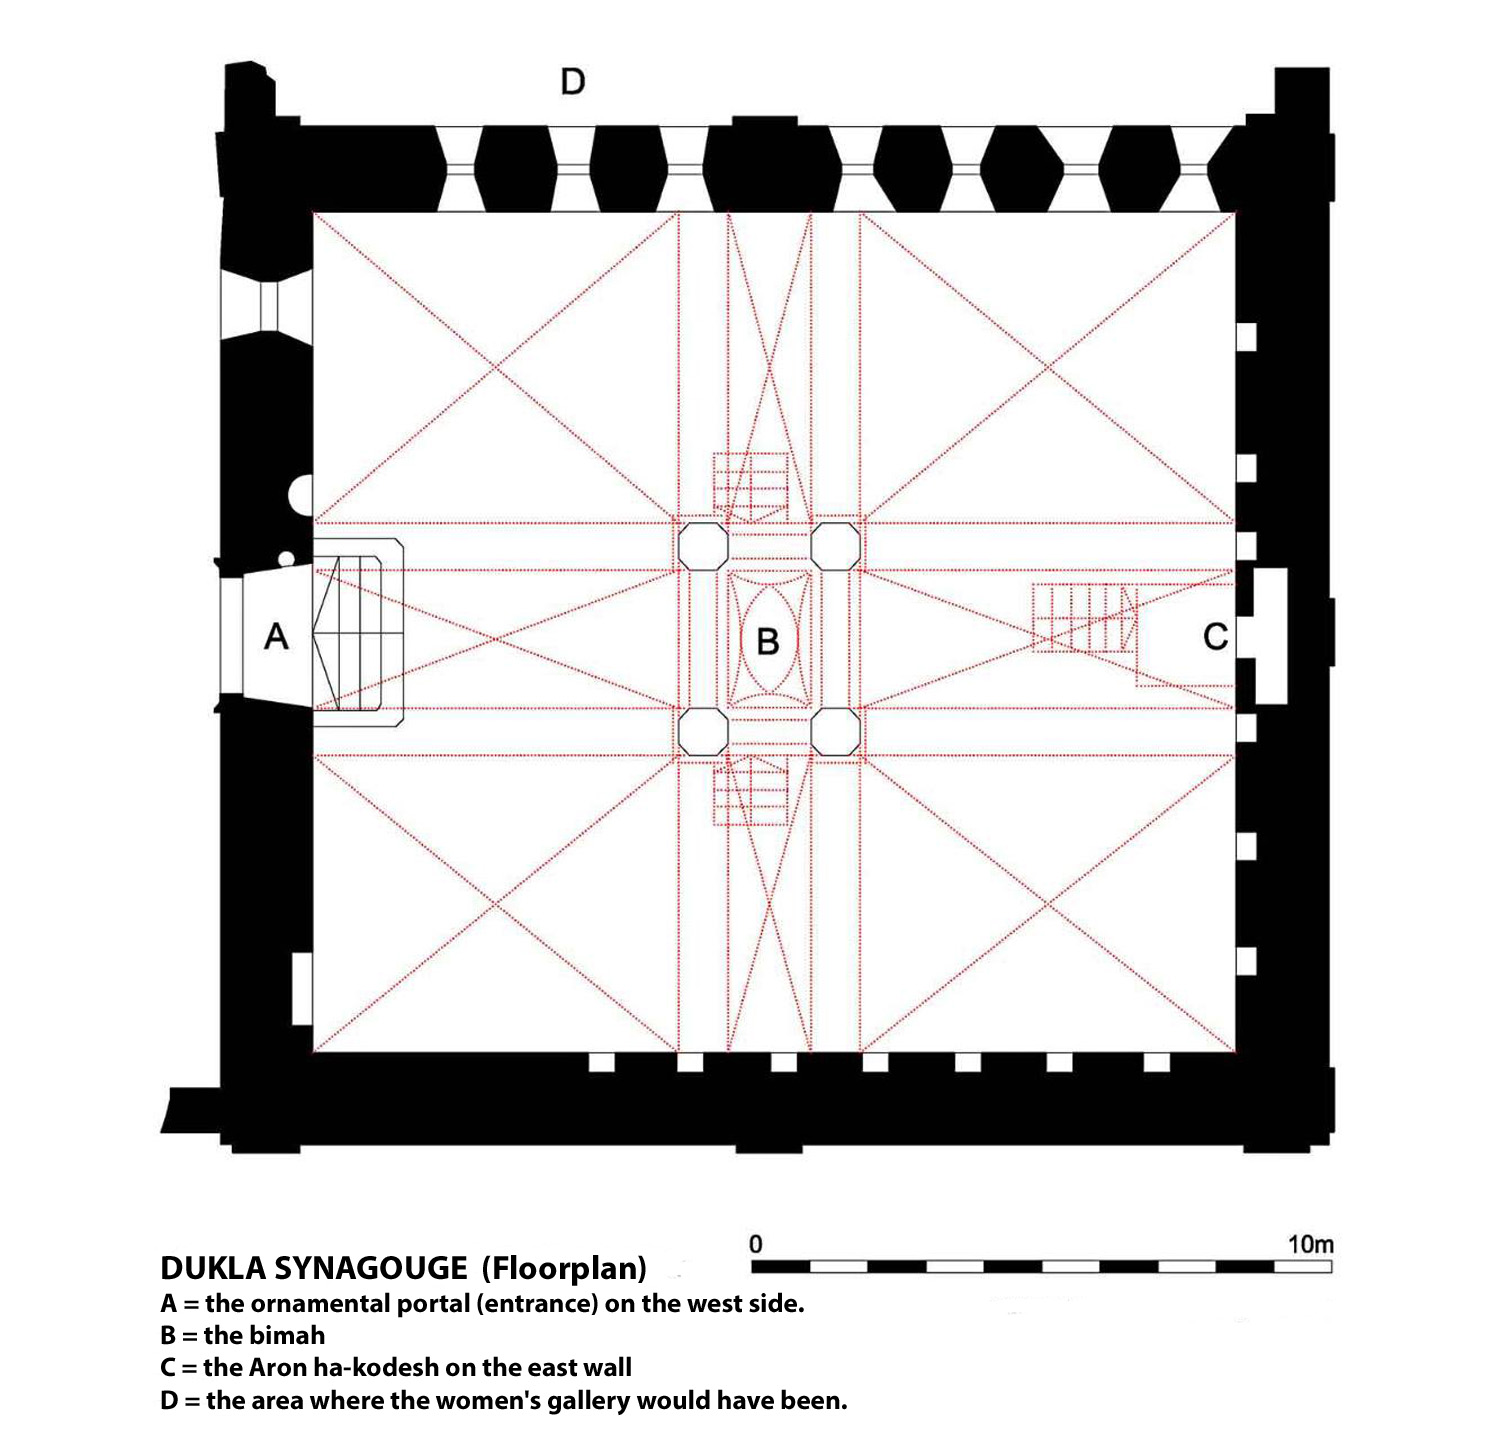 The Dukla synagogue floor plan.